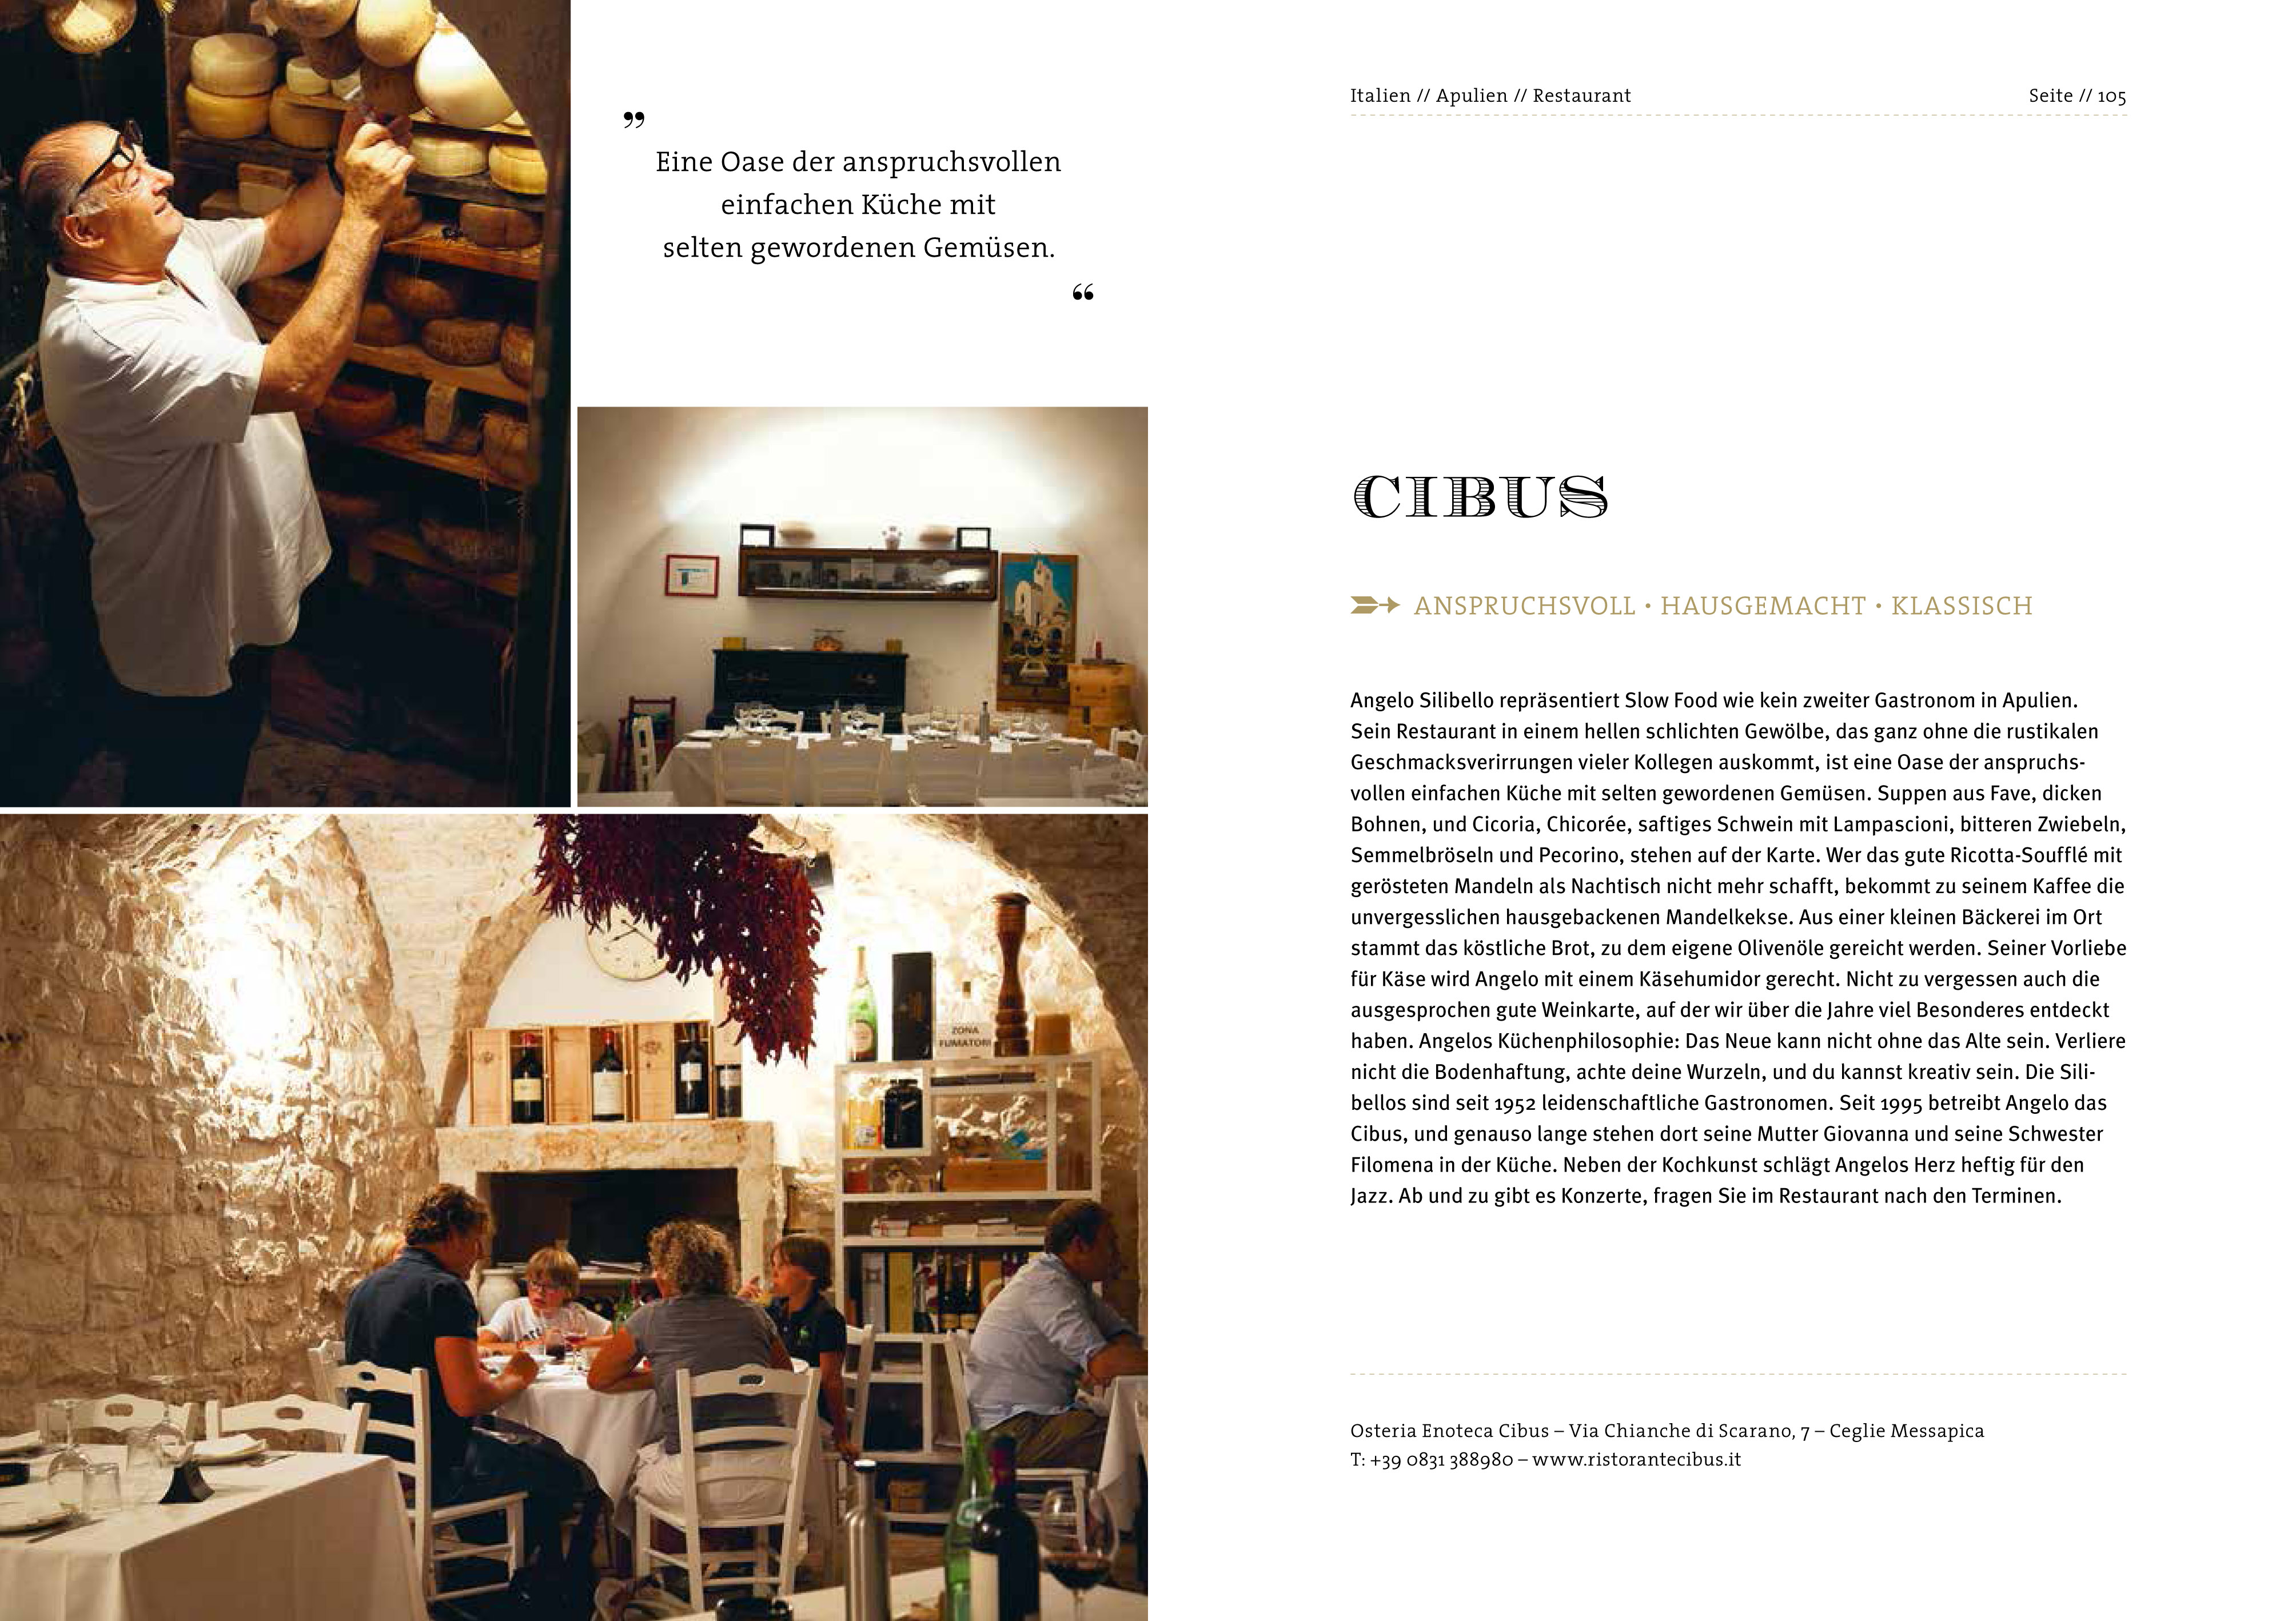 99 perfekte Restaurants, Bars & Cafés